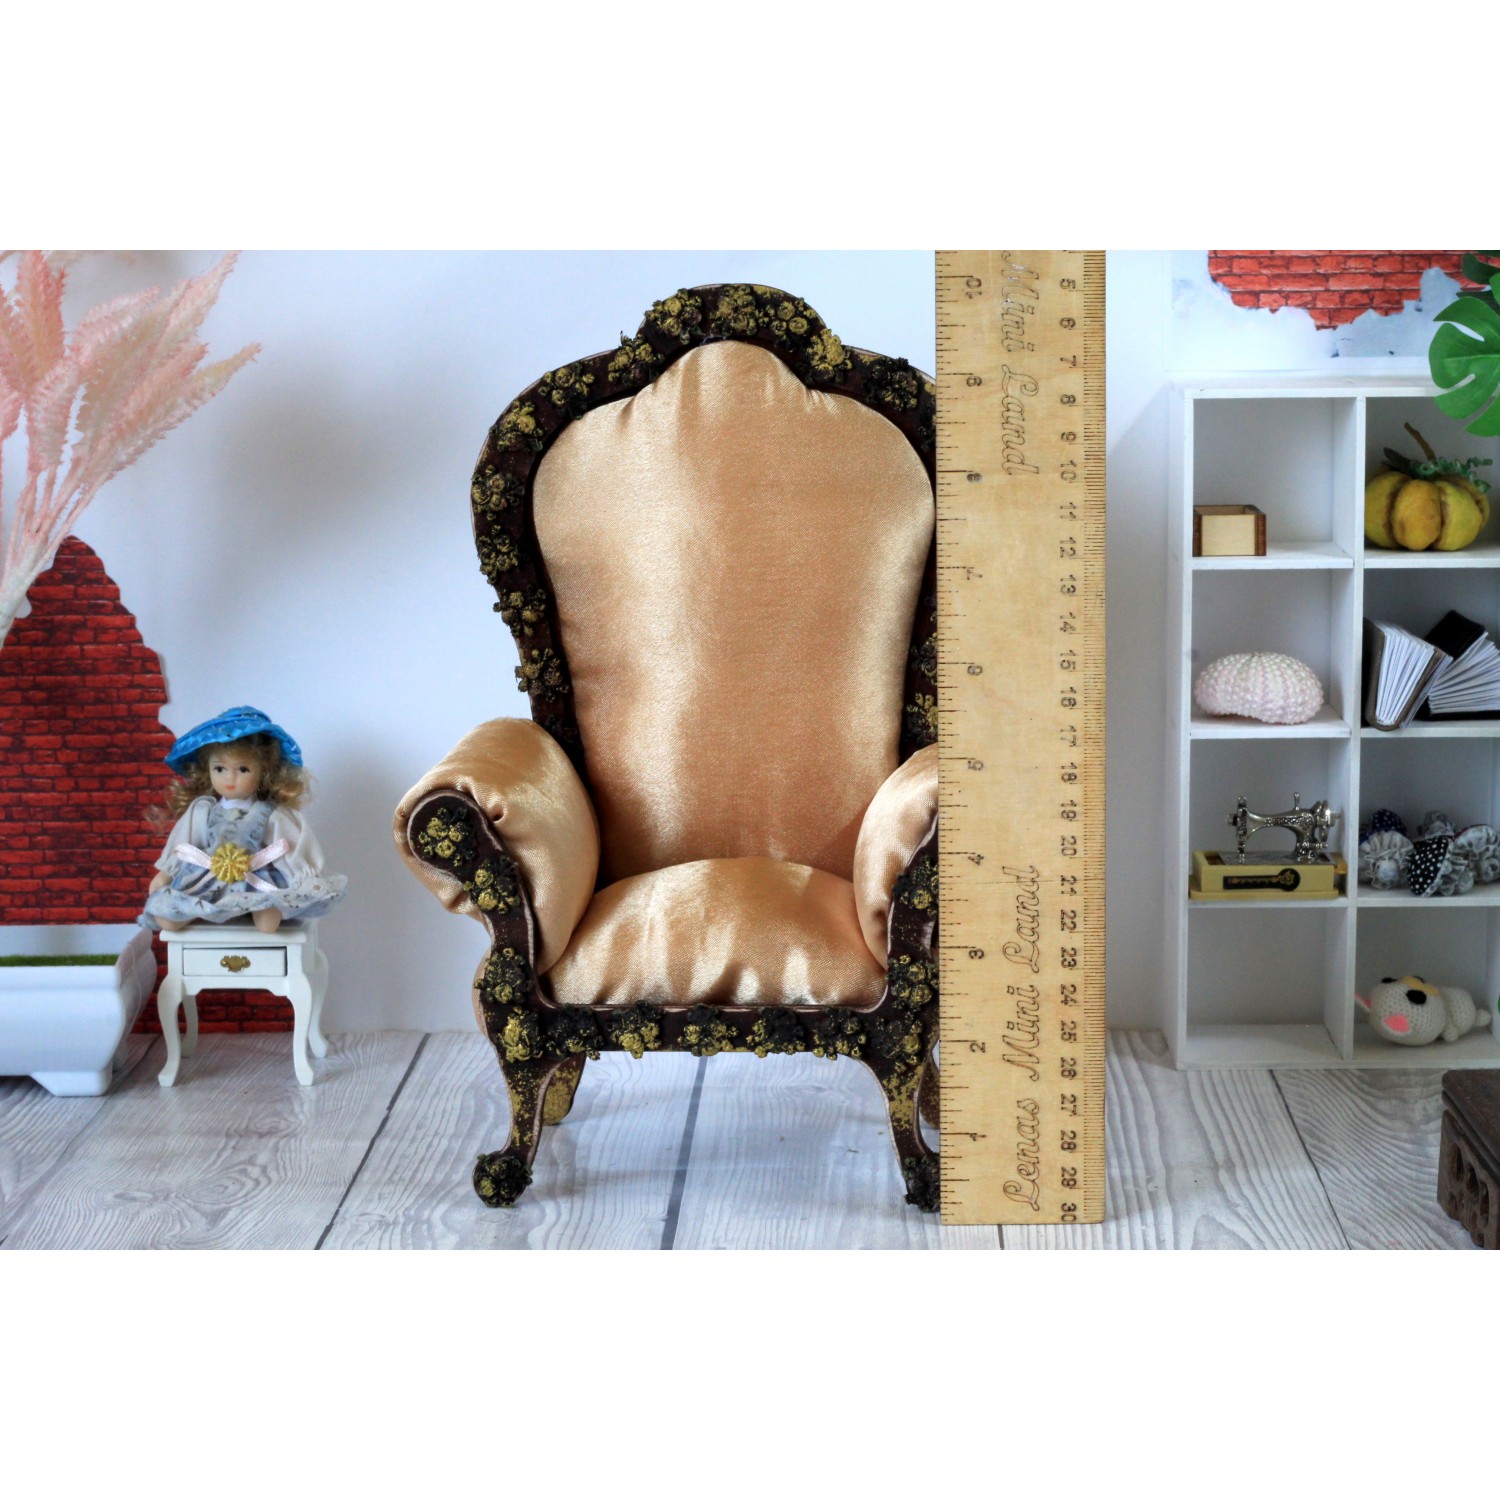 Miniature chair royal luxury 1:6 scale dollhouse furniture 3D golden